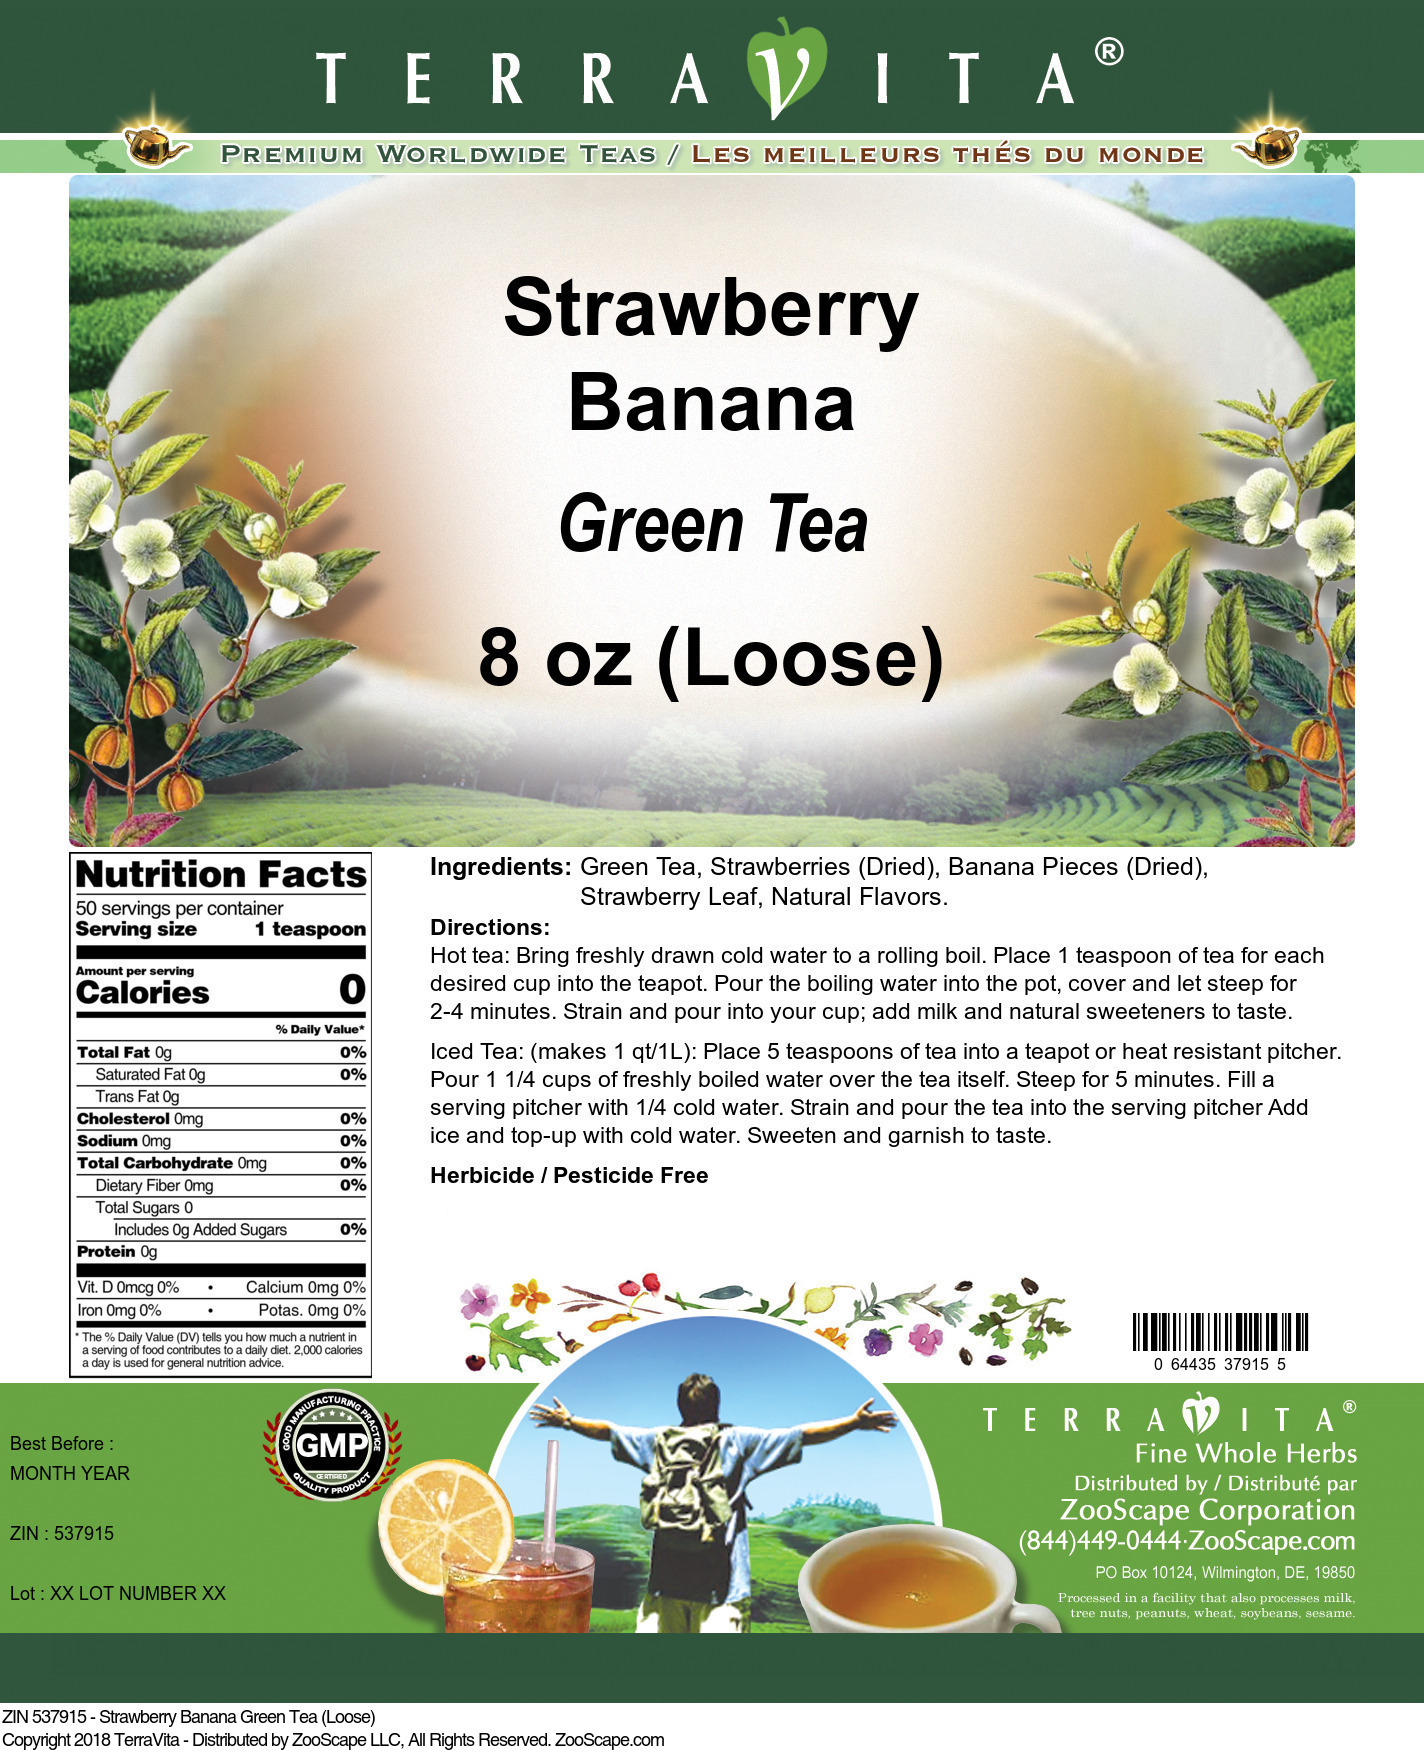 Strawberry Banana Green Tea (Loose) - Label